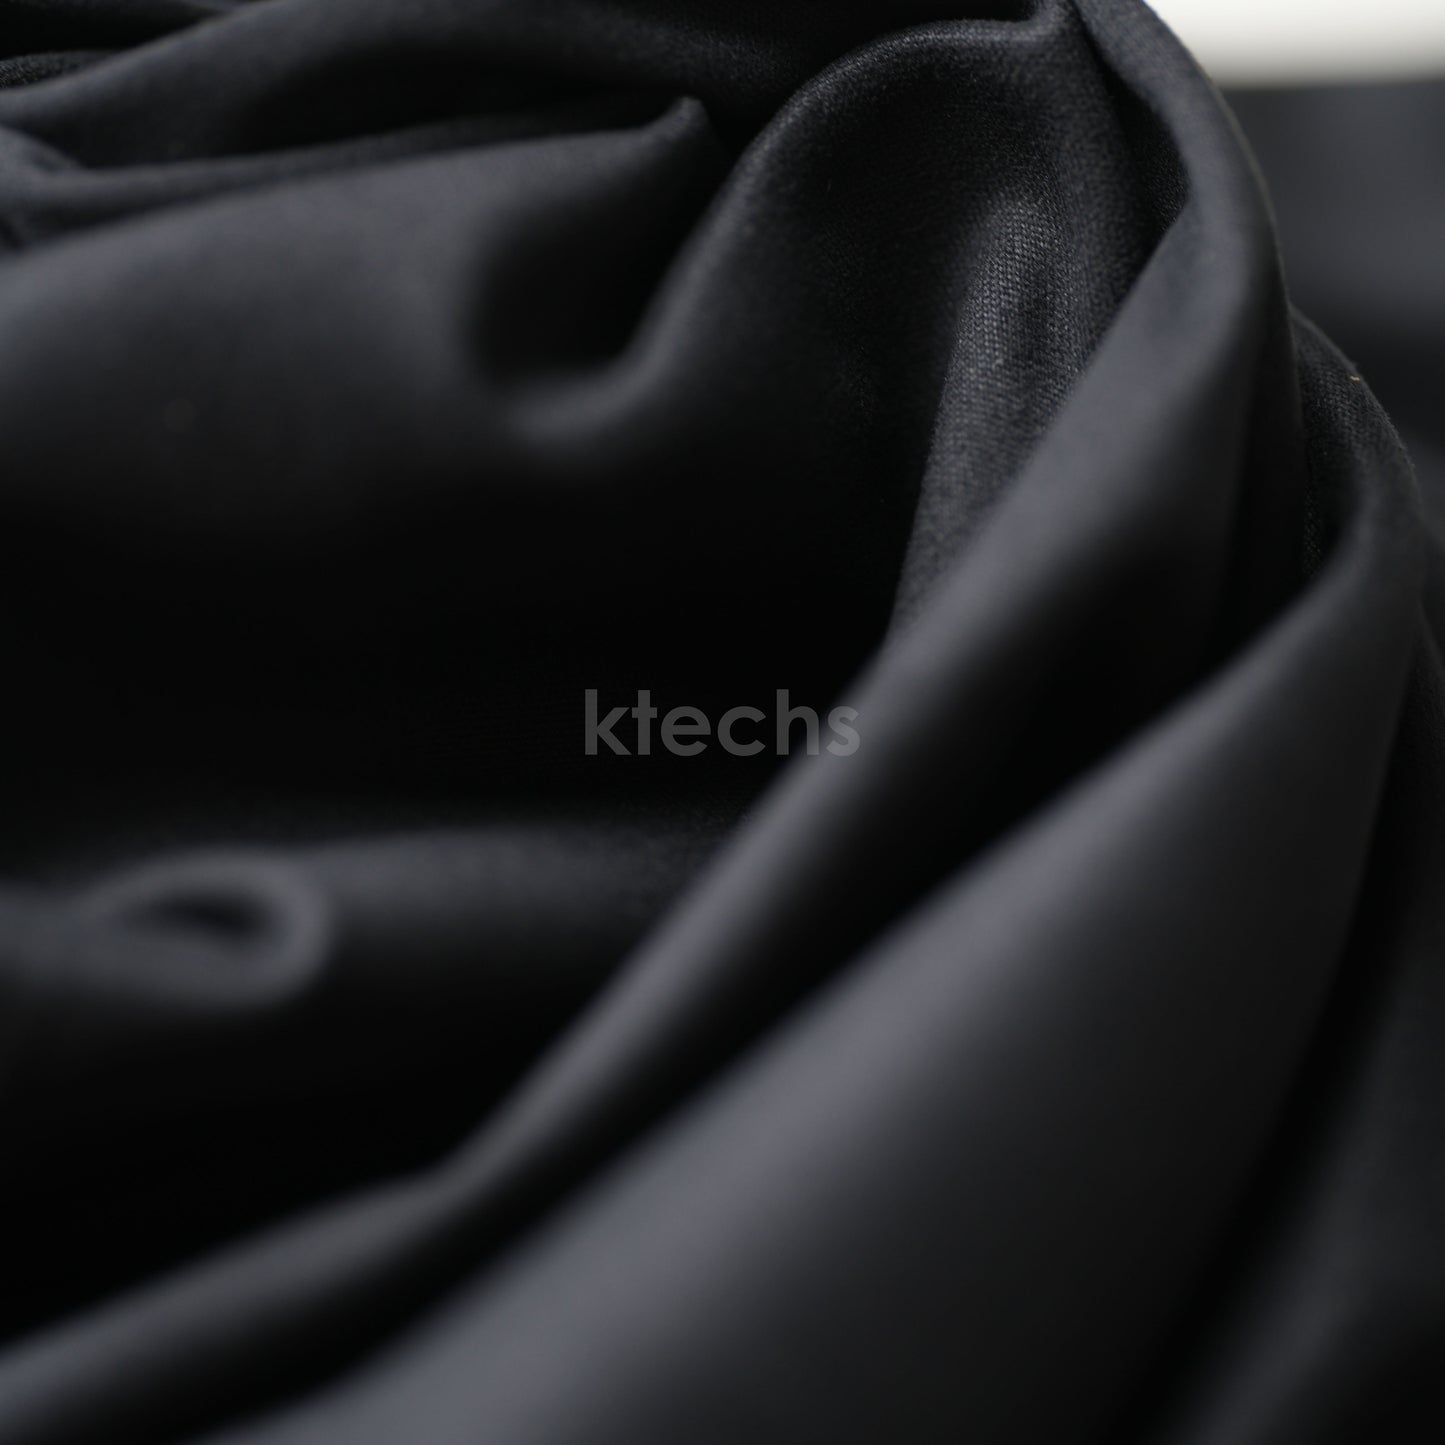 ktechs Microfiber Dust Cover Cloth